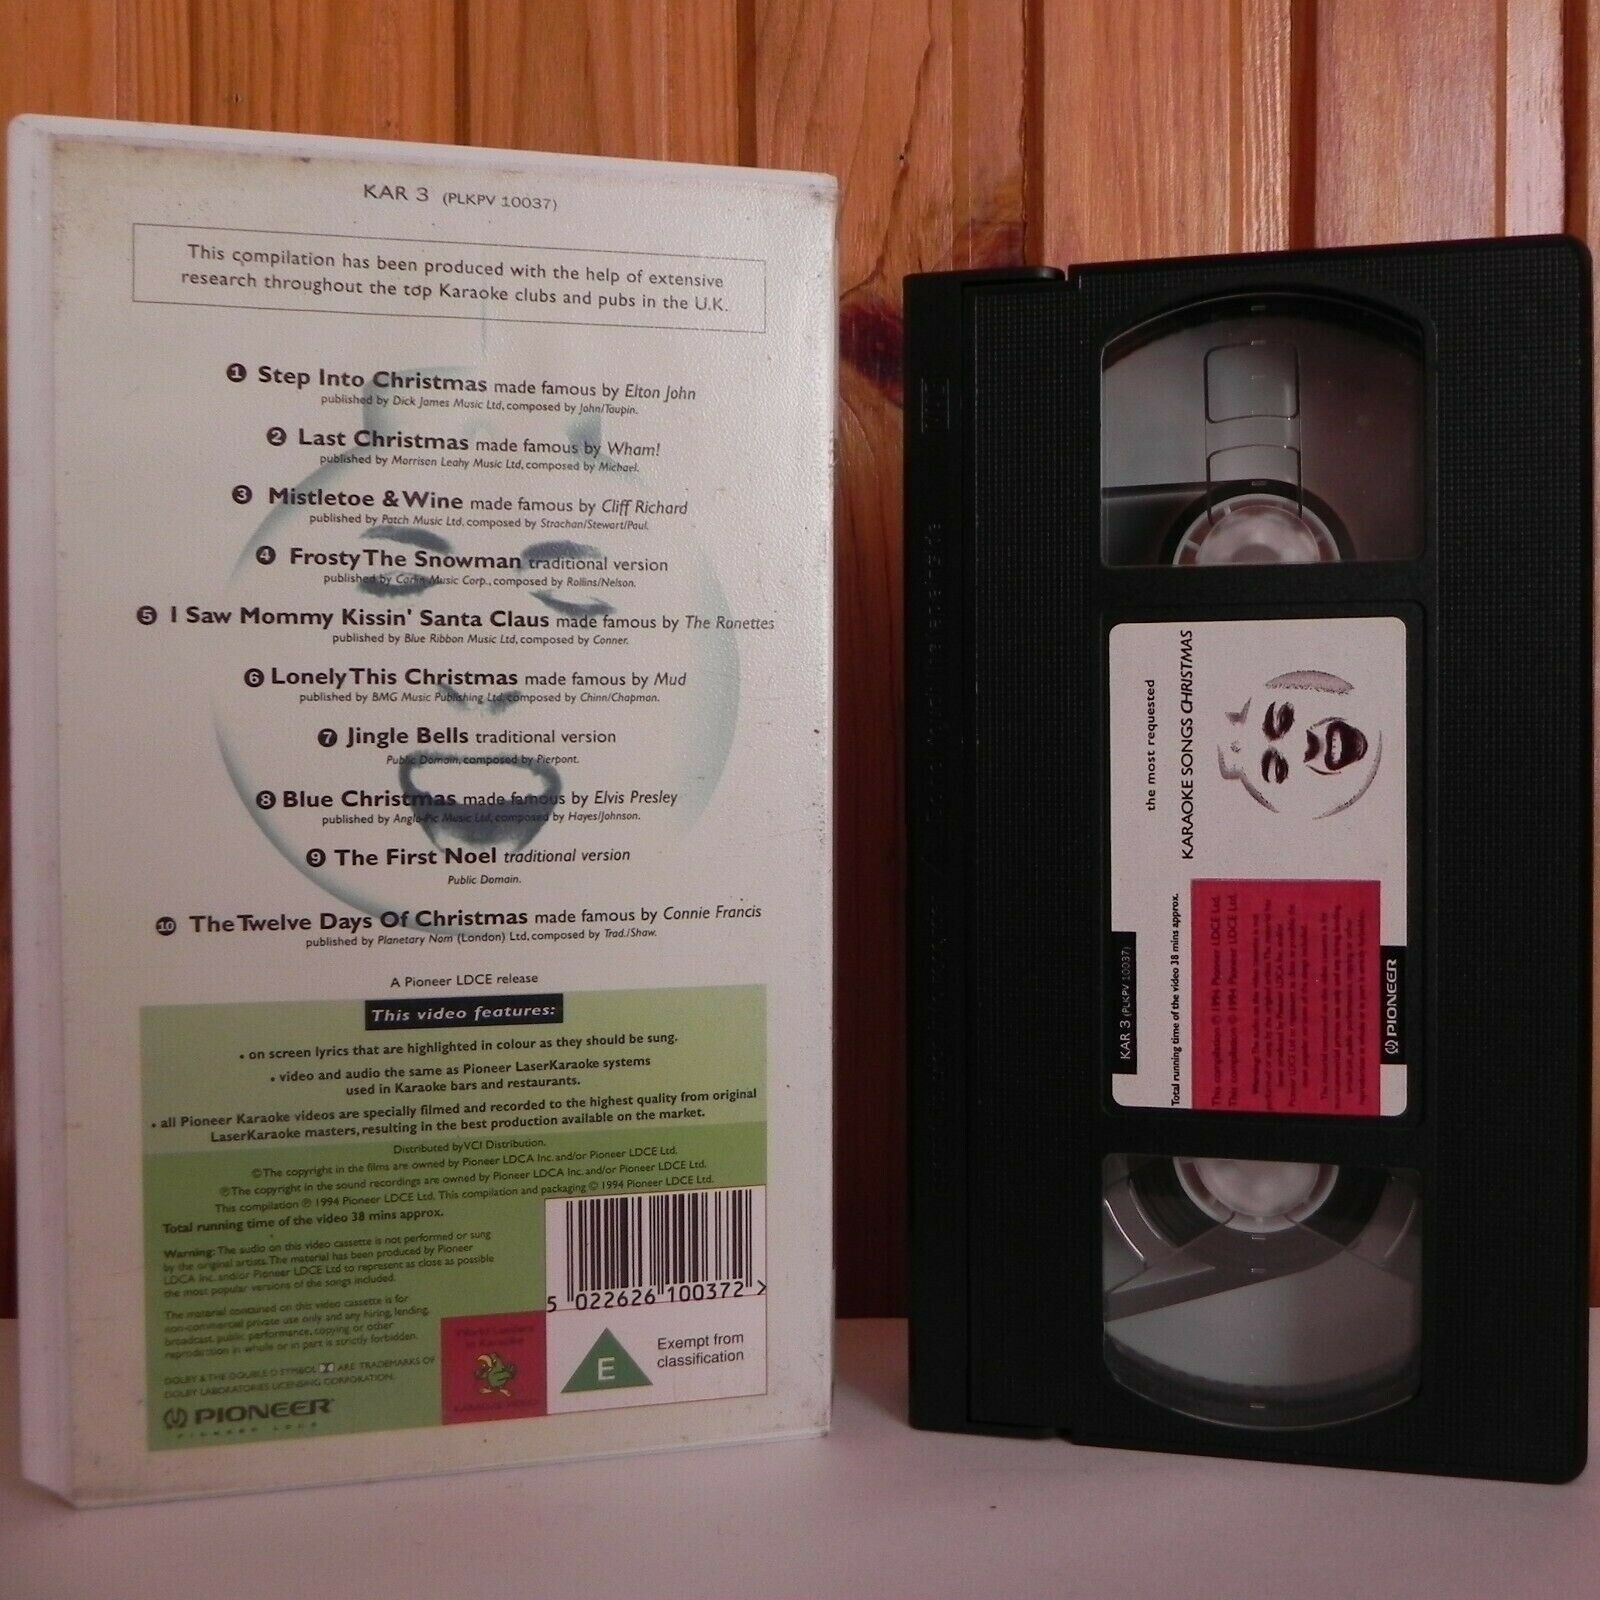 Karaoke Songs Christmas - Last Christmas - Jingle Bells - The First Noel - VHS-